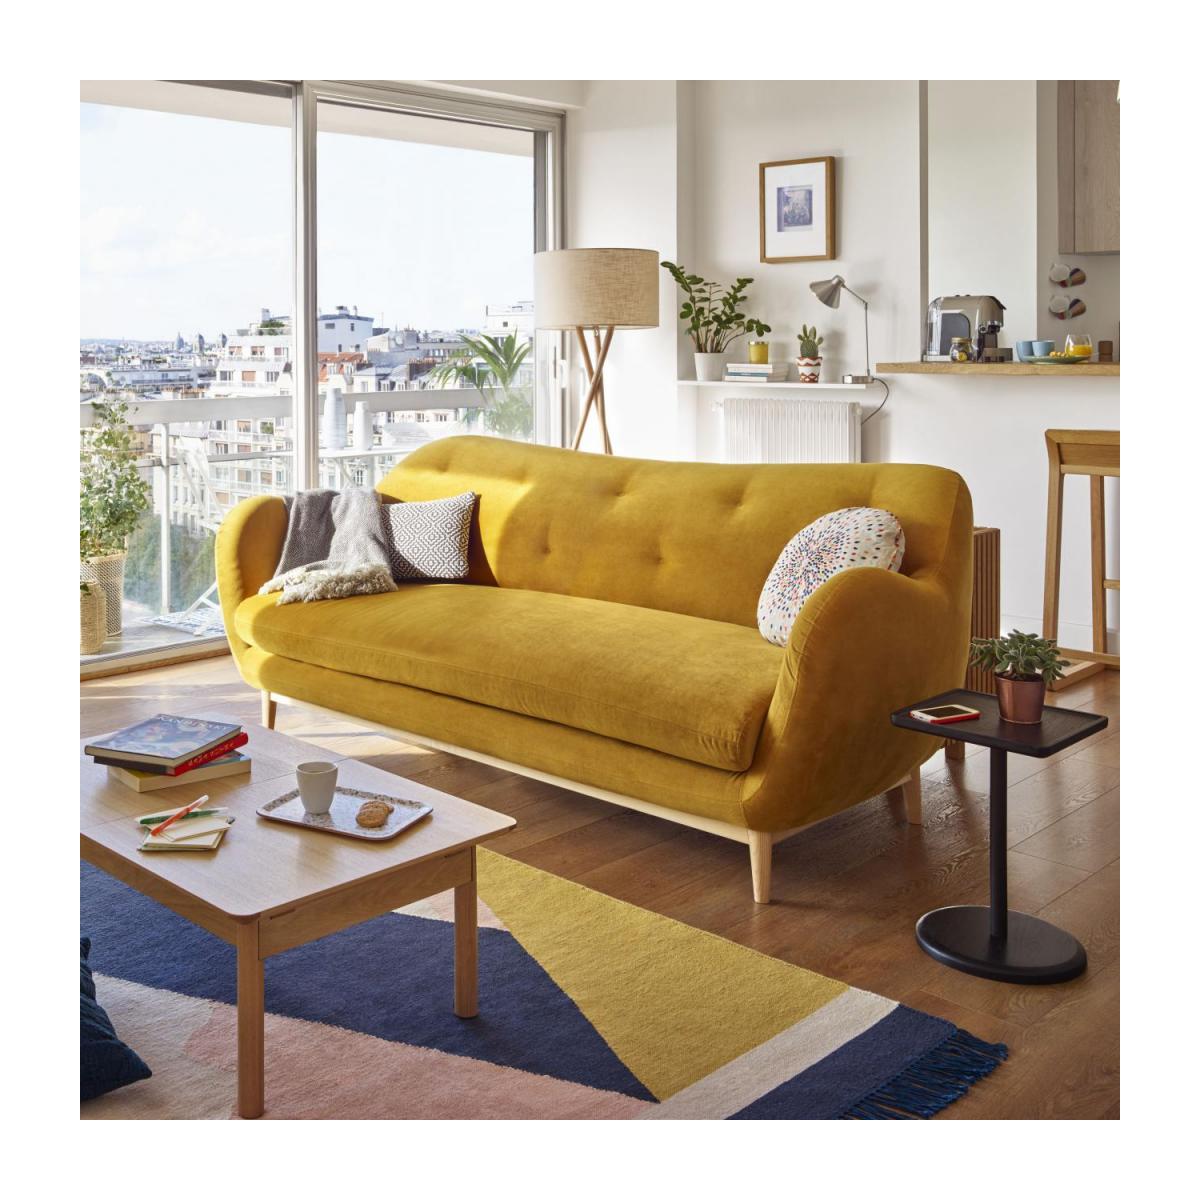 Mustard colored sofas